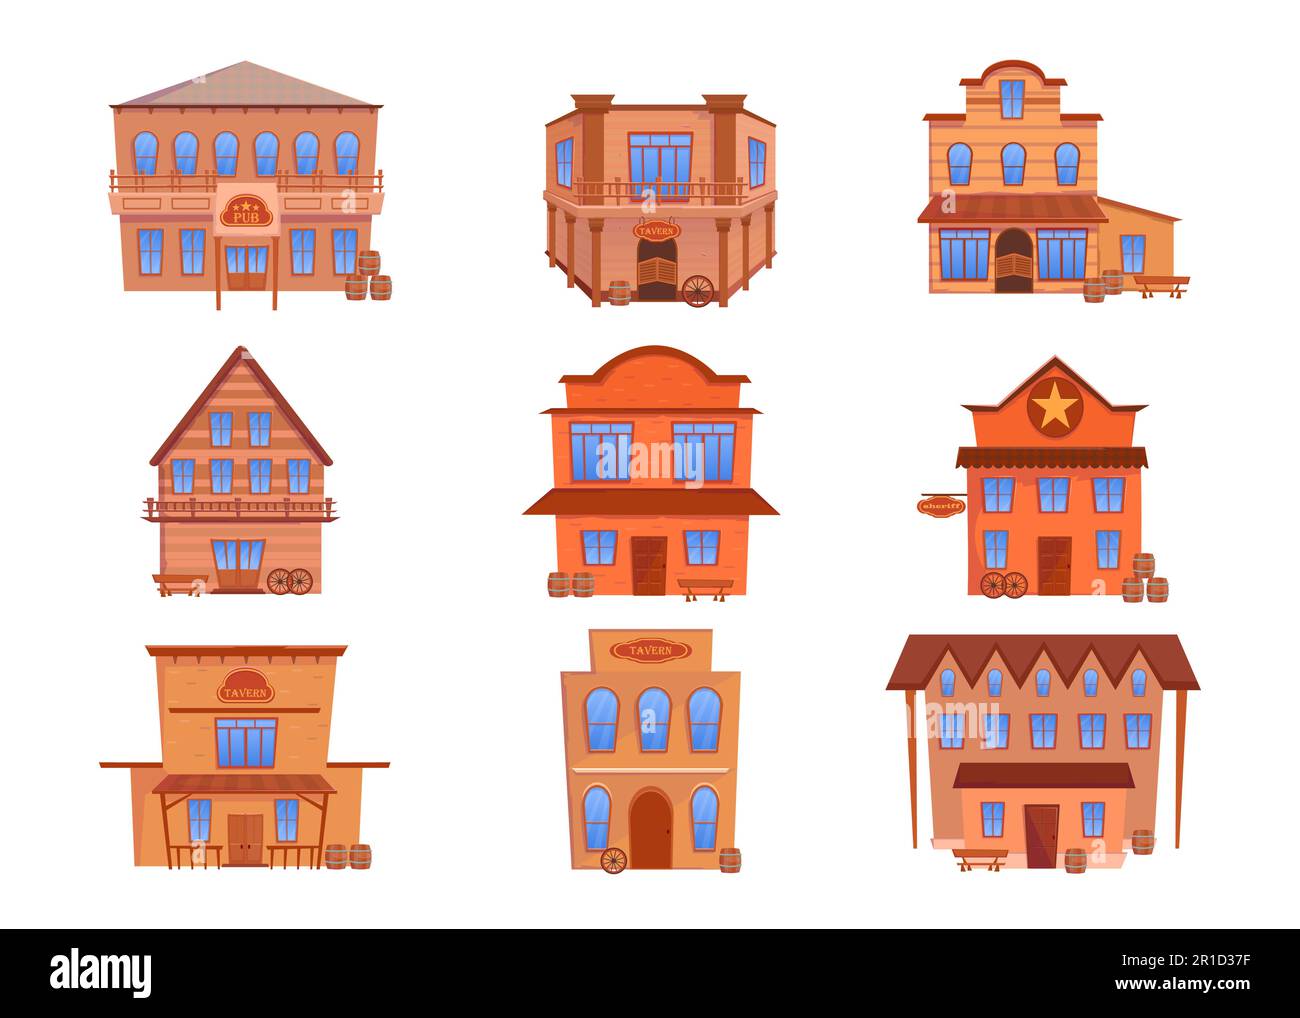 Western wooden buildings vector illustrations set Stock Vector